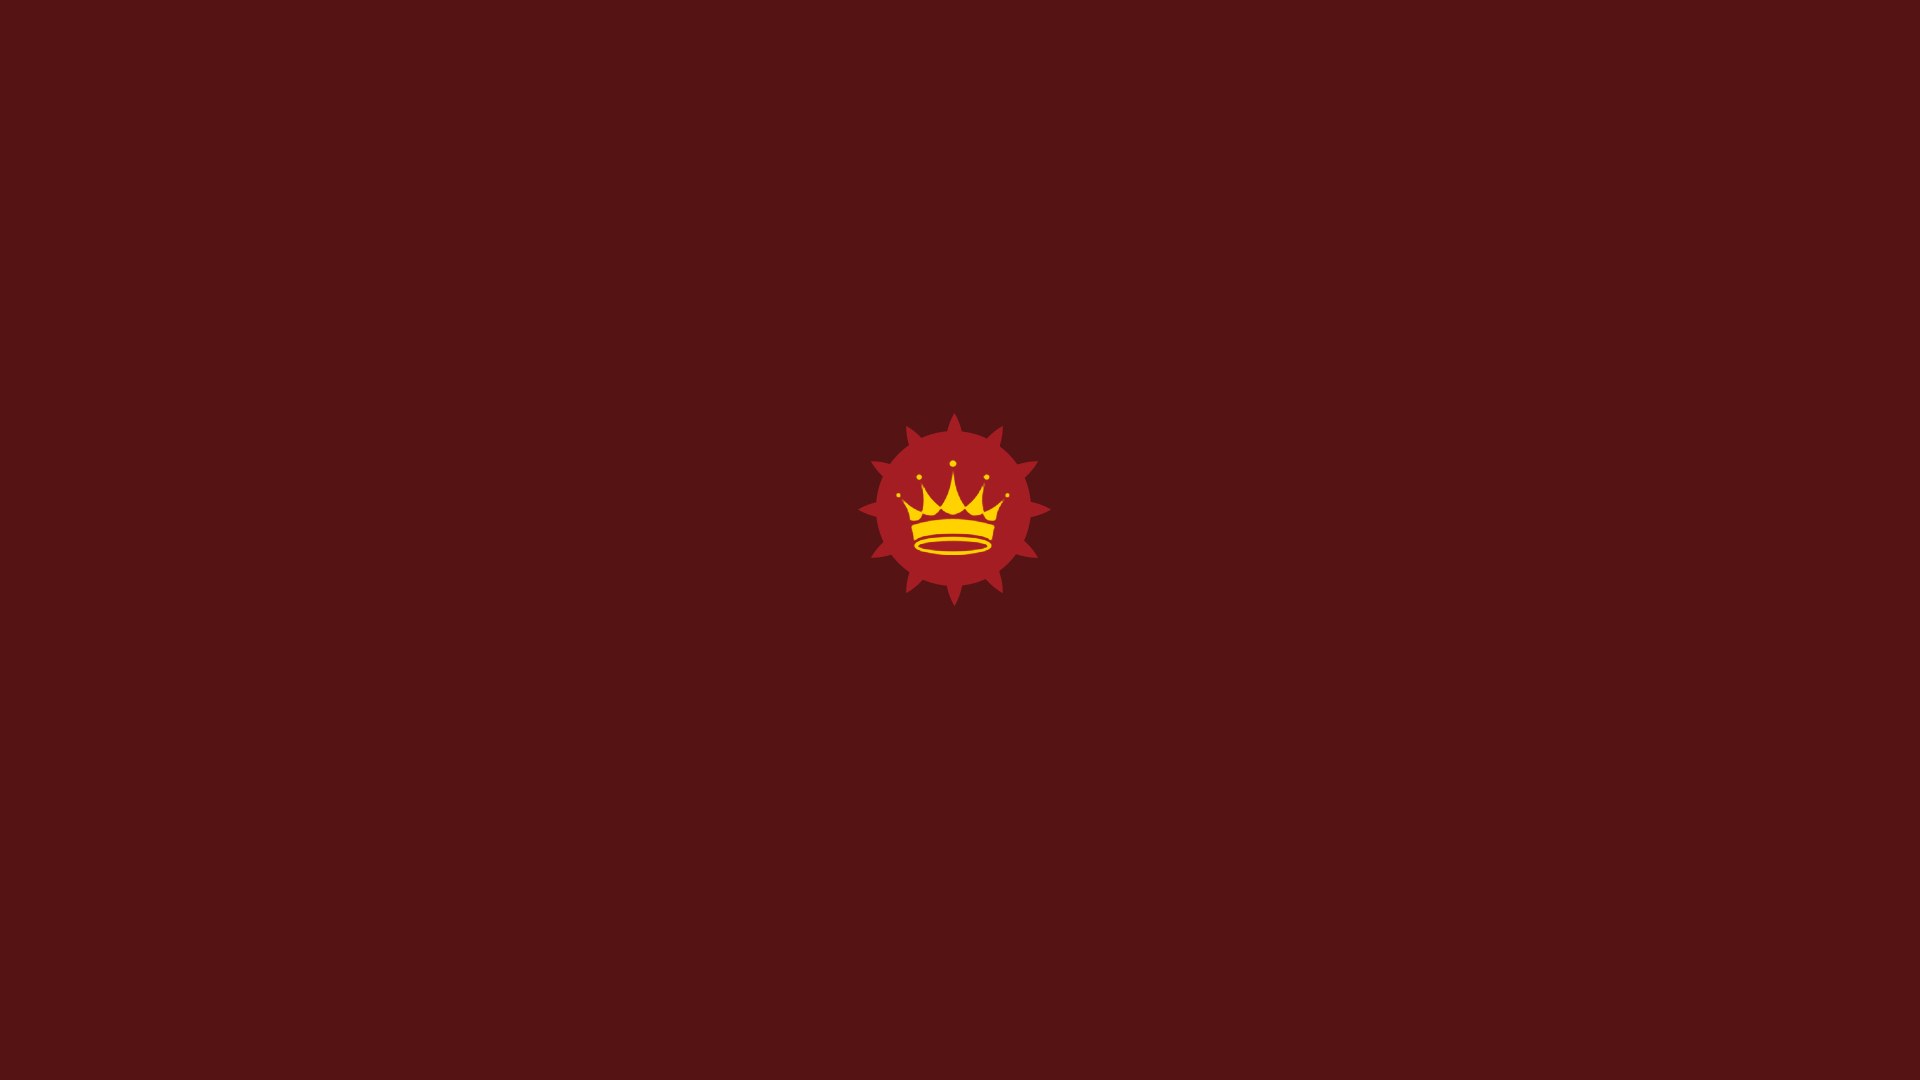 General 1920x1080 red crown minimalism red background